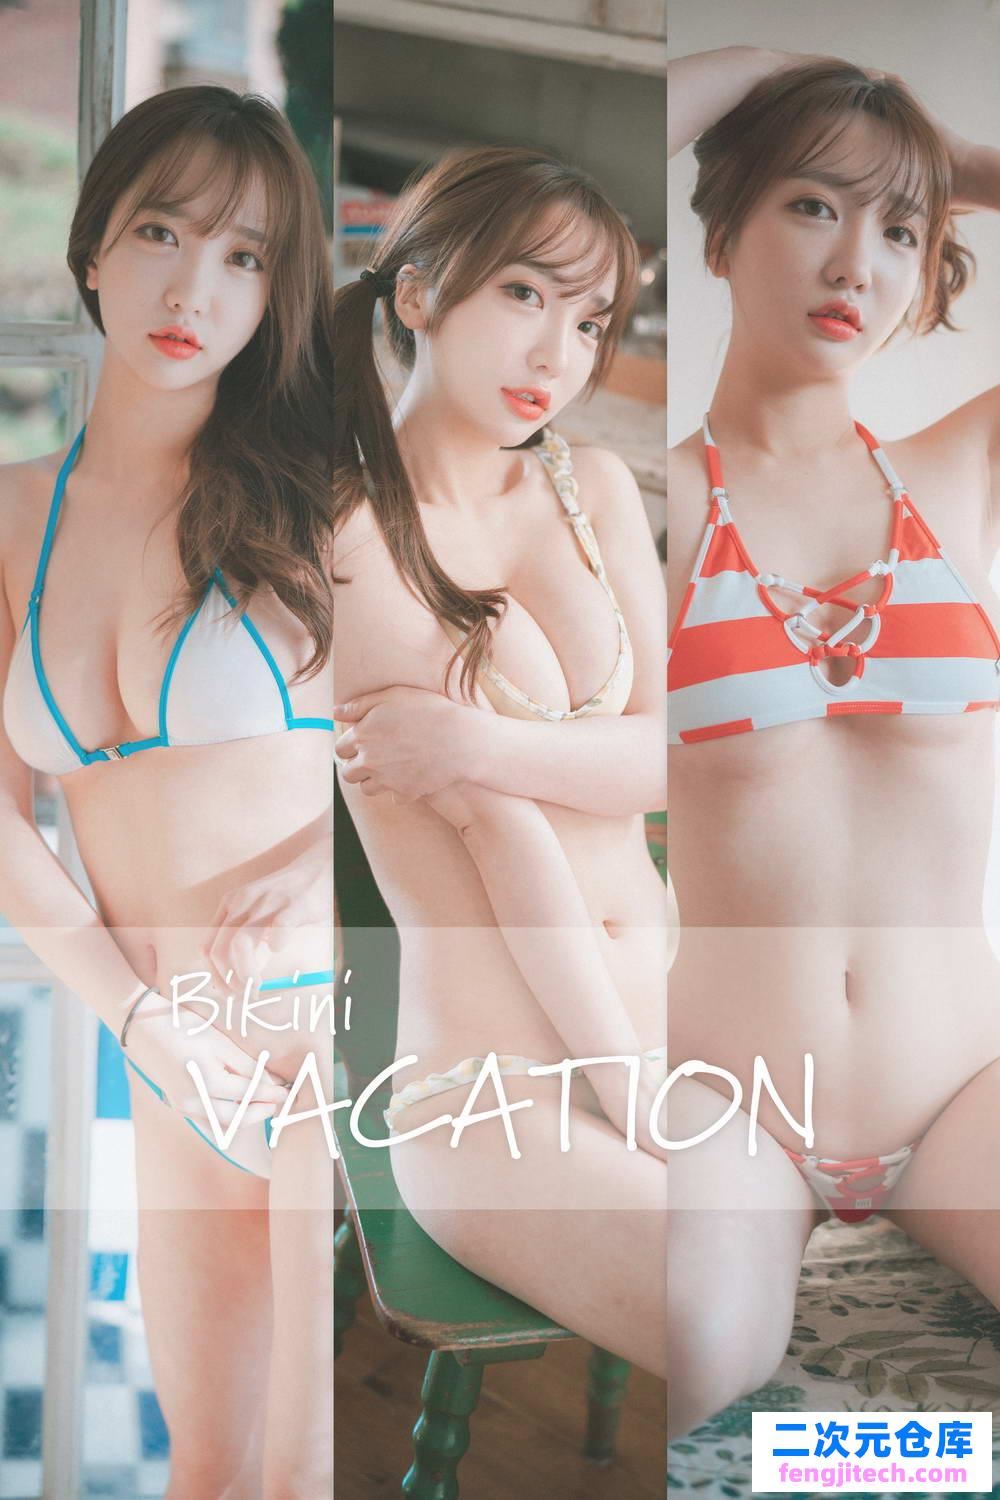 [DJAWA] Yeeun – Bikini Vacation #1 [/849MB]